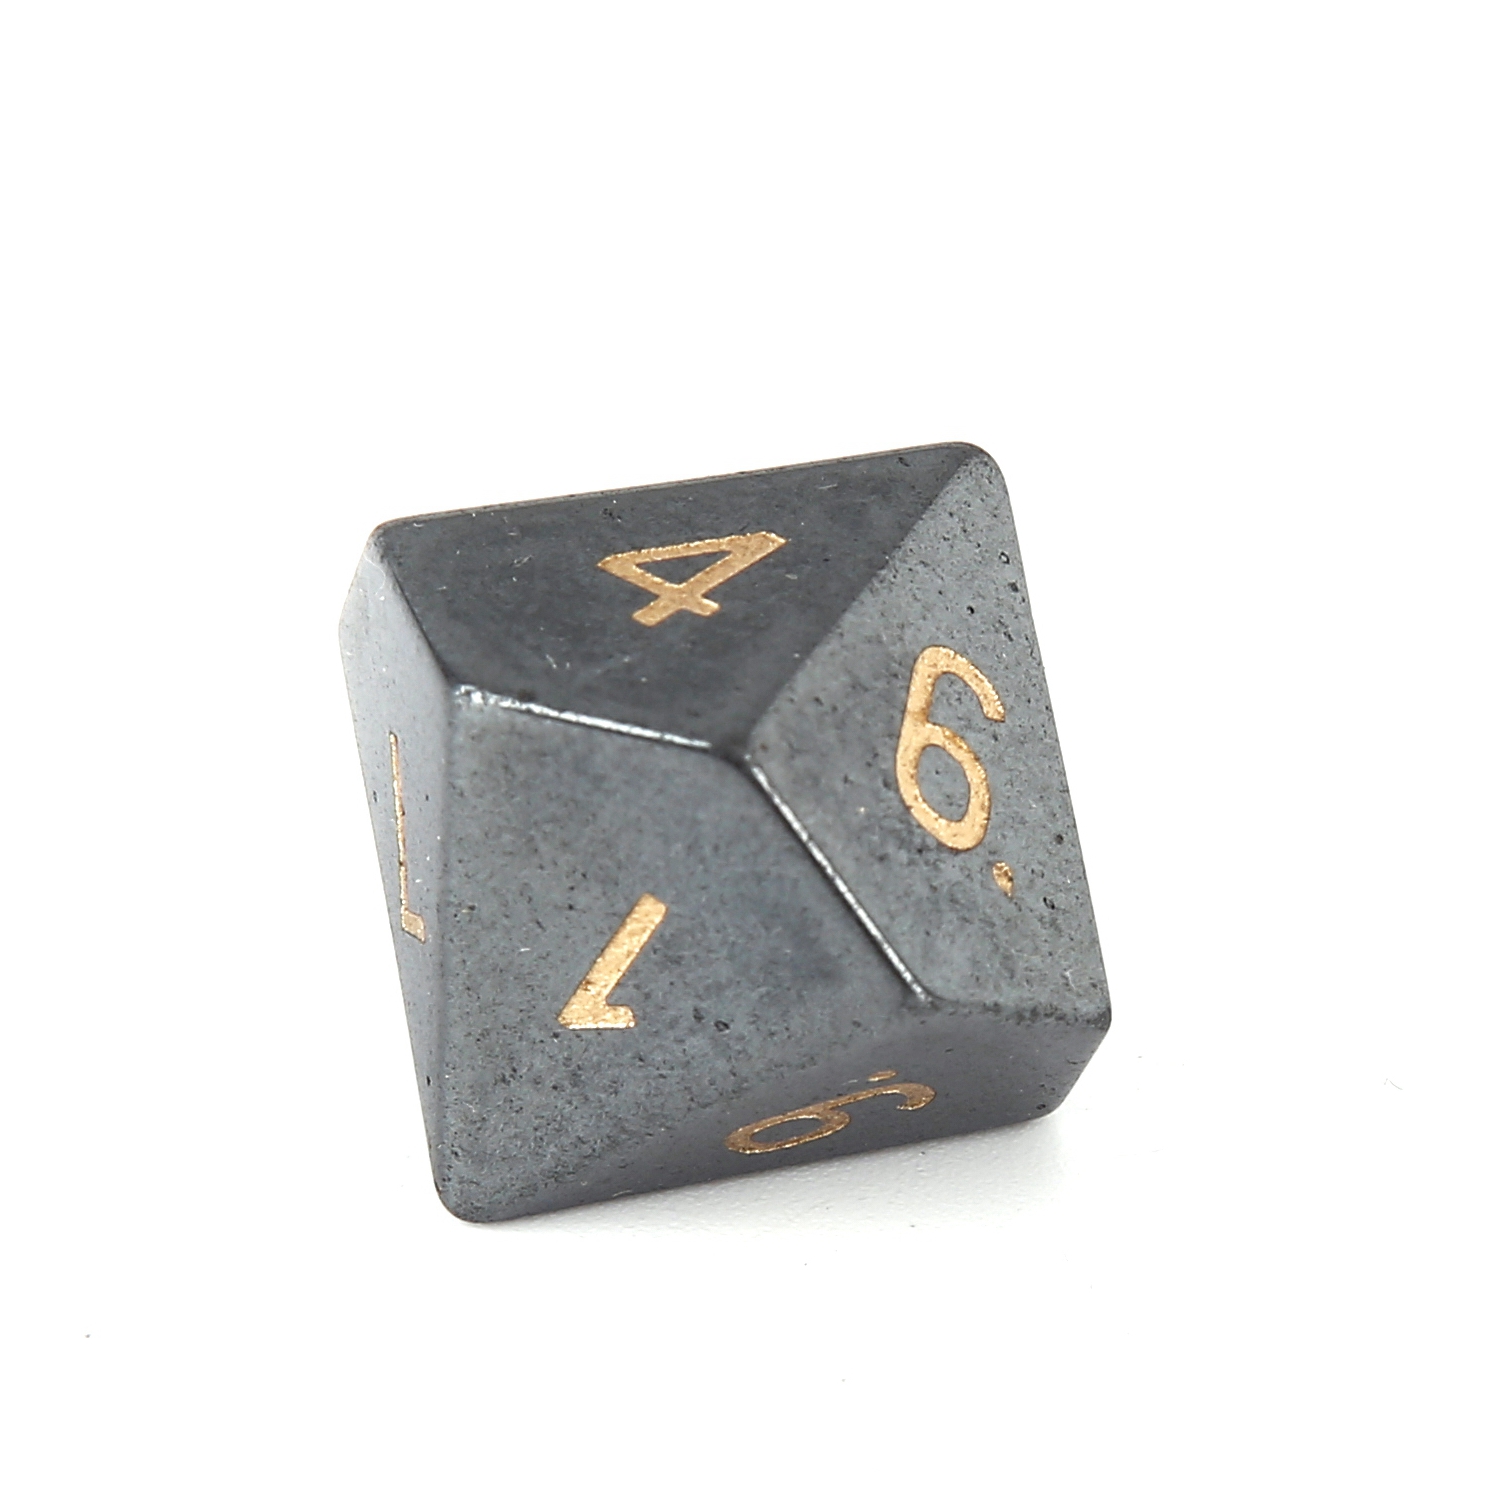 4:D10 icosahedron